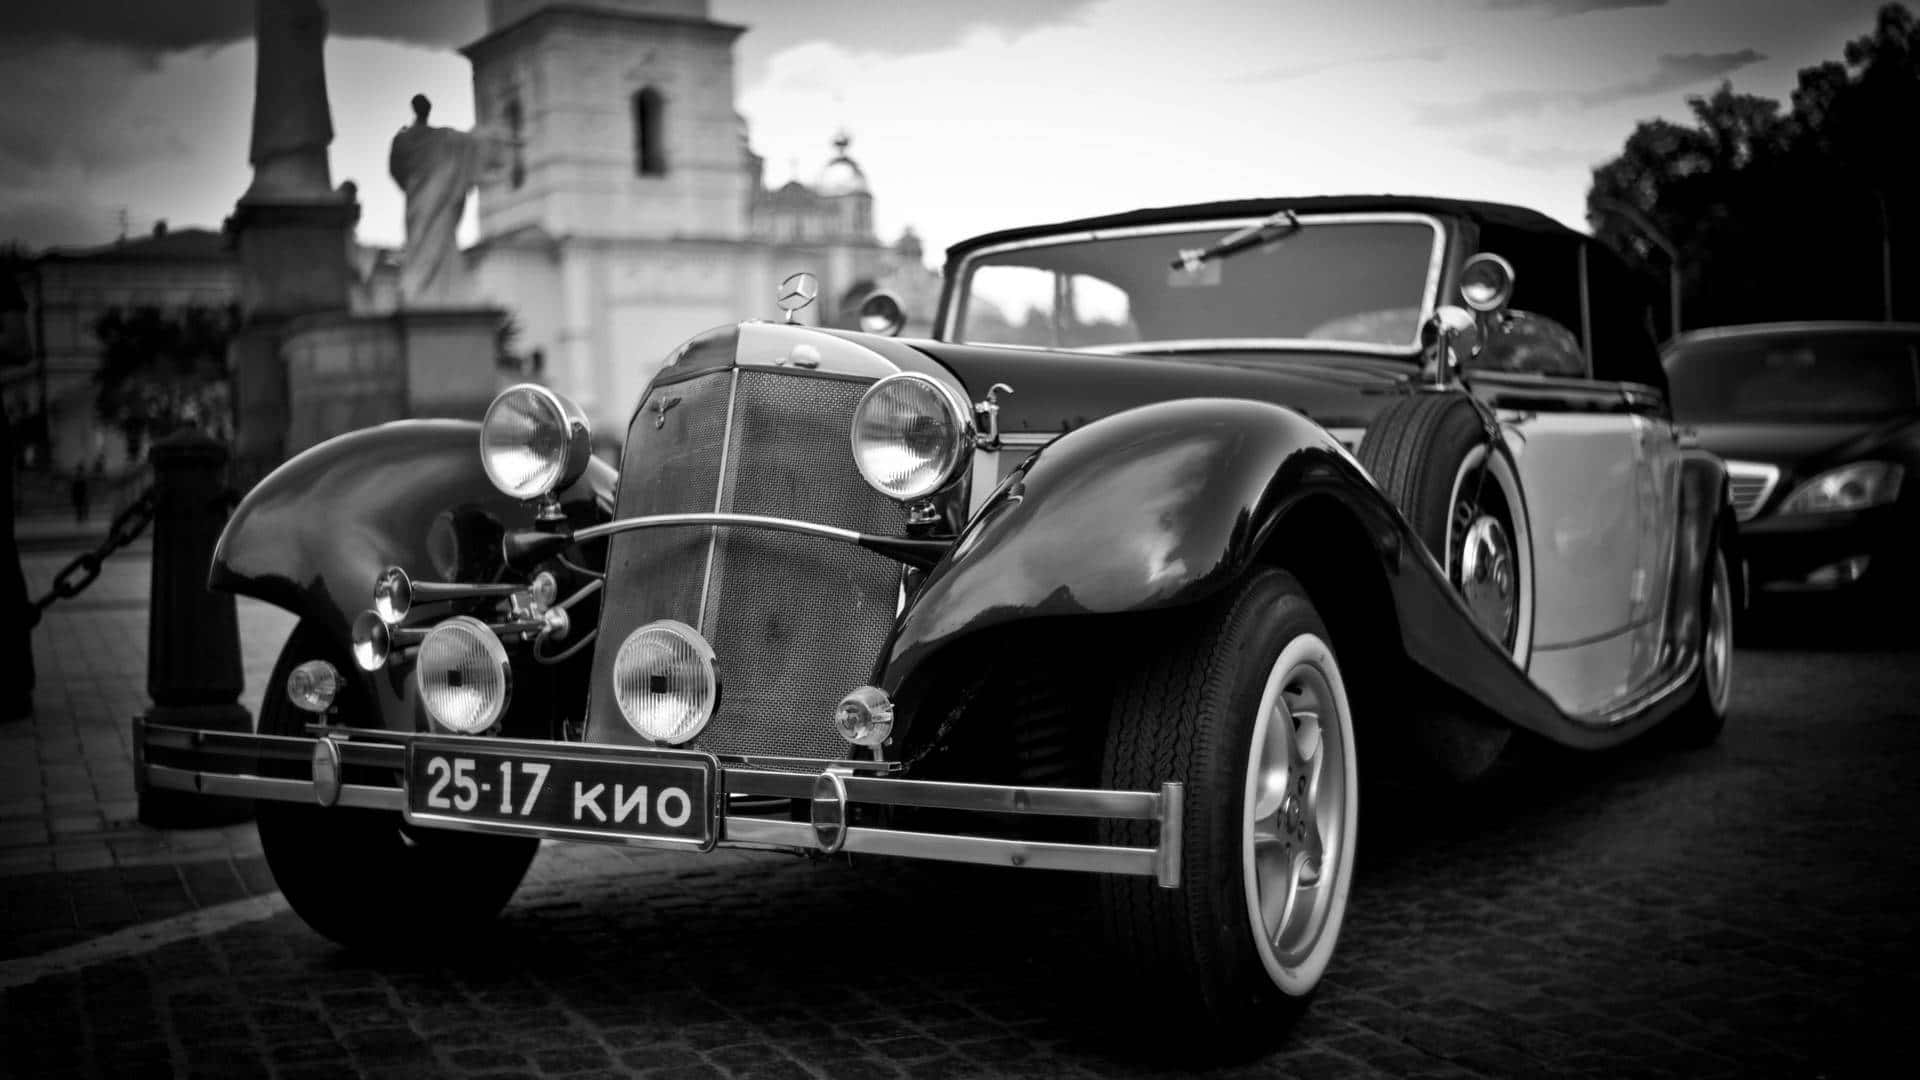 Classic Elegance - Black and White Vintage Car Wallpaper